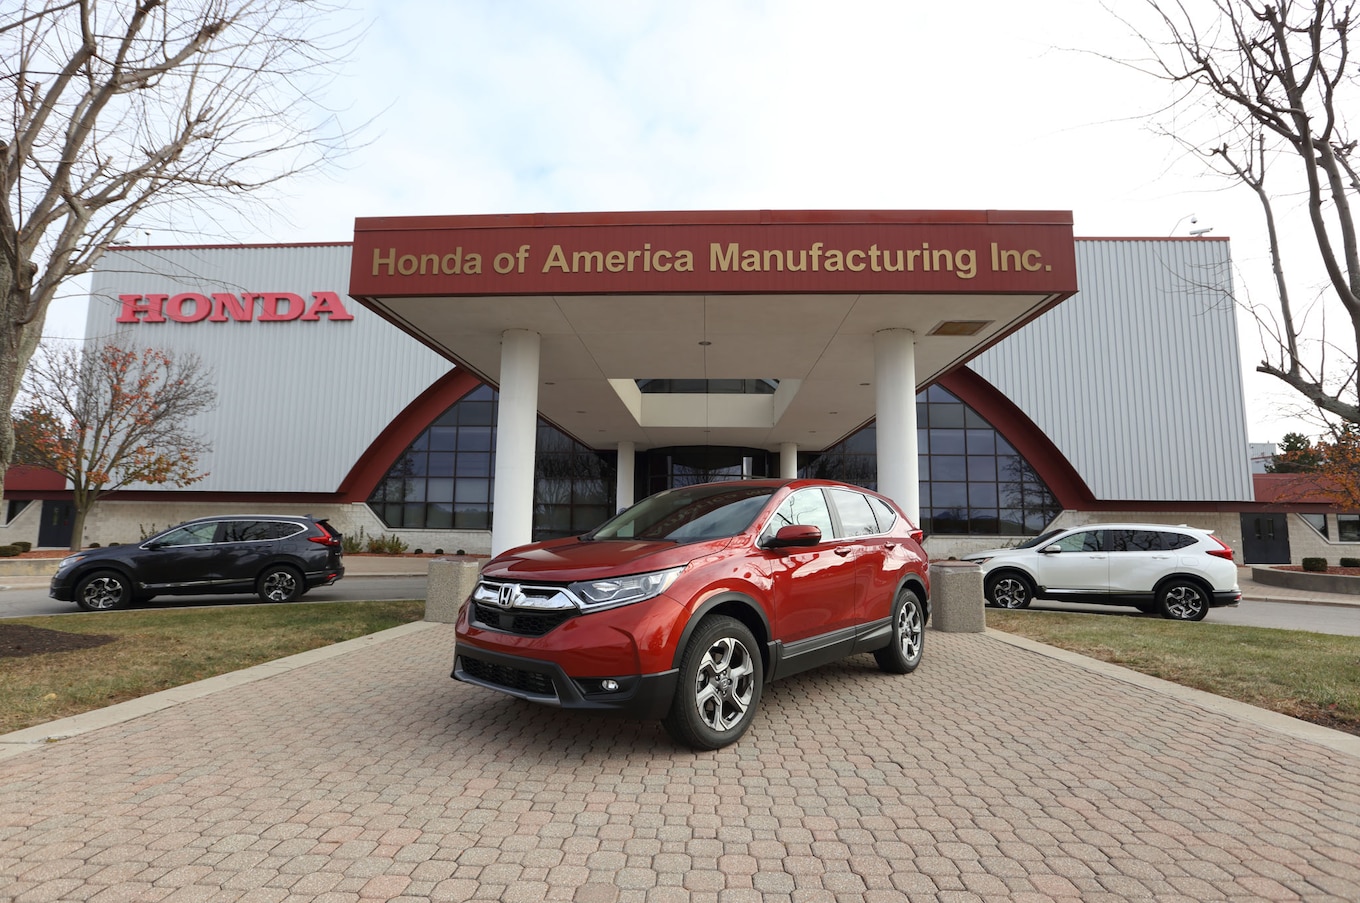 2017 Honda CR V at Ohio Plant